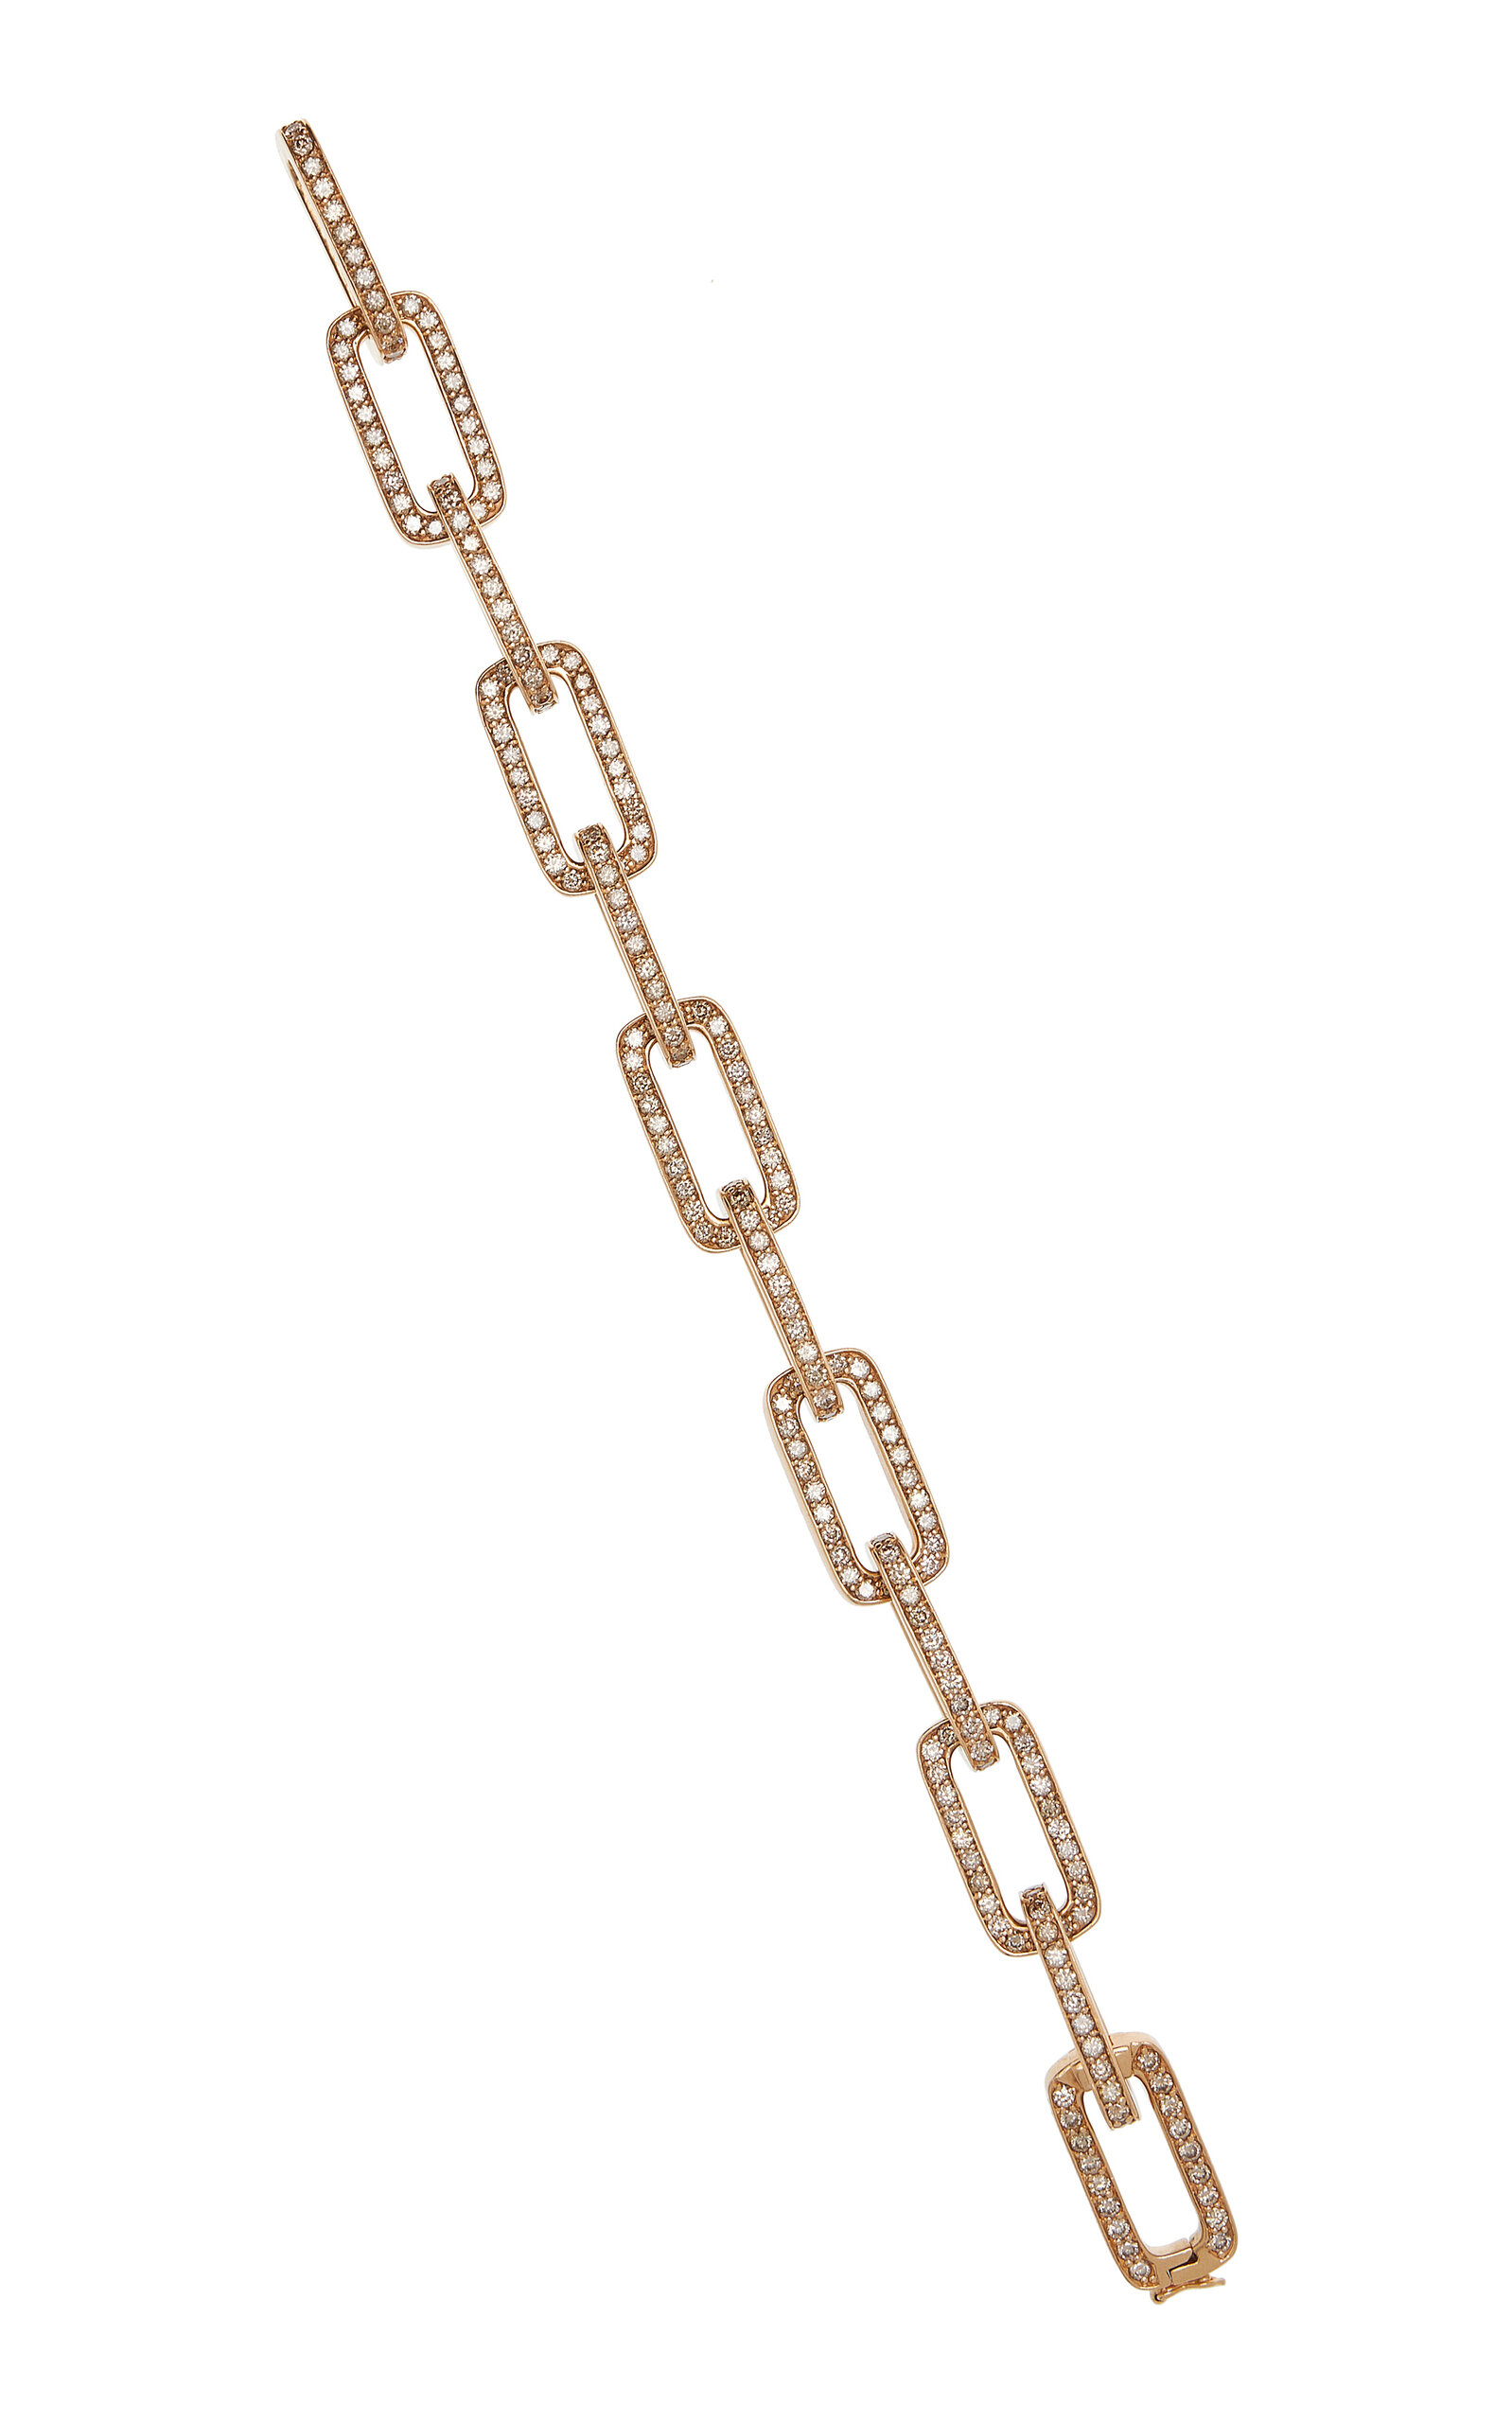 Piranesi Women's 18K Gold Mosaique Link Bracelet in Champange Diamond